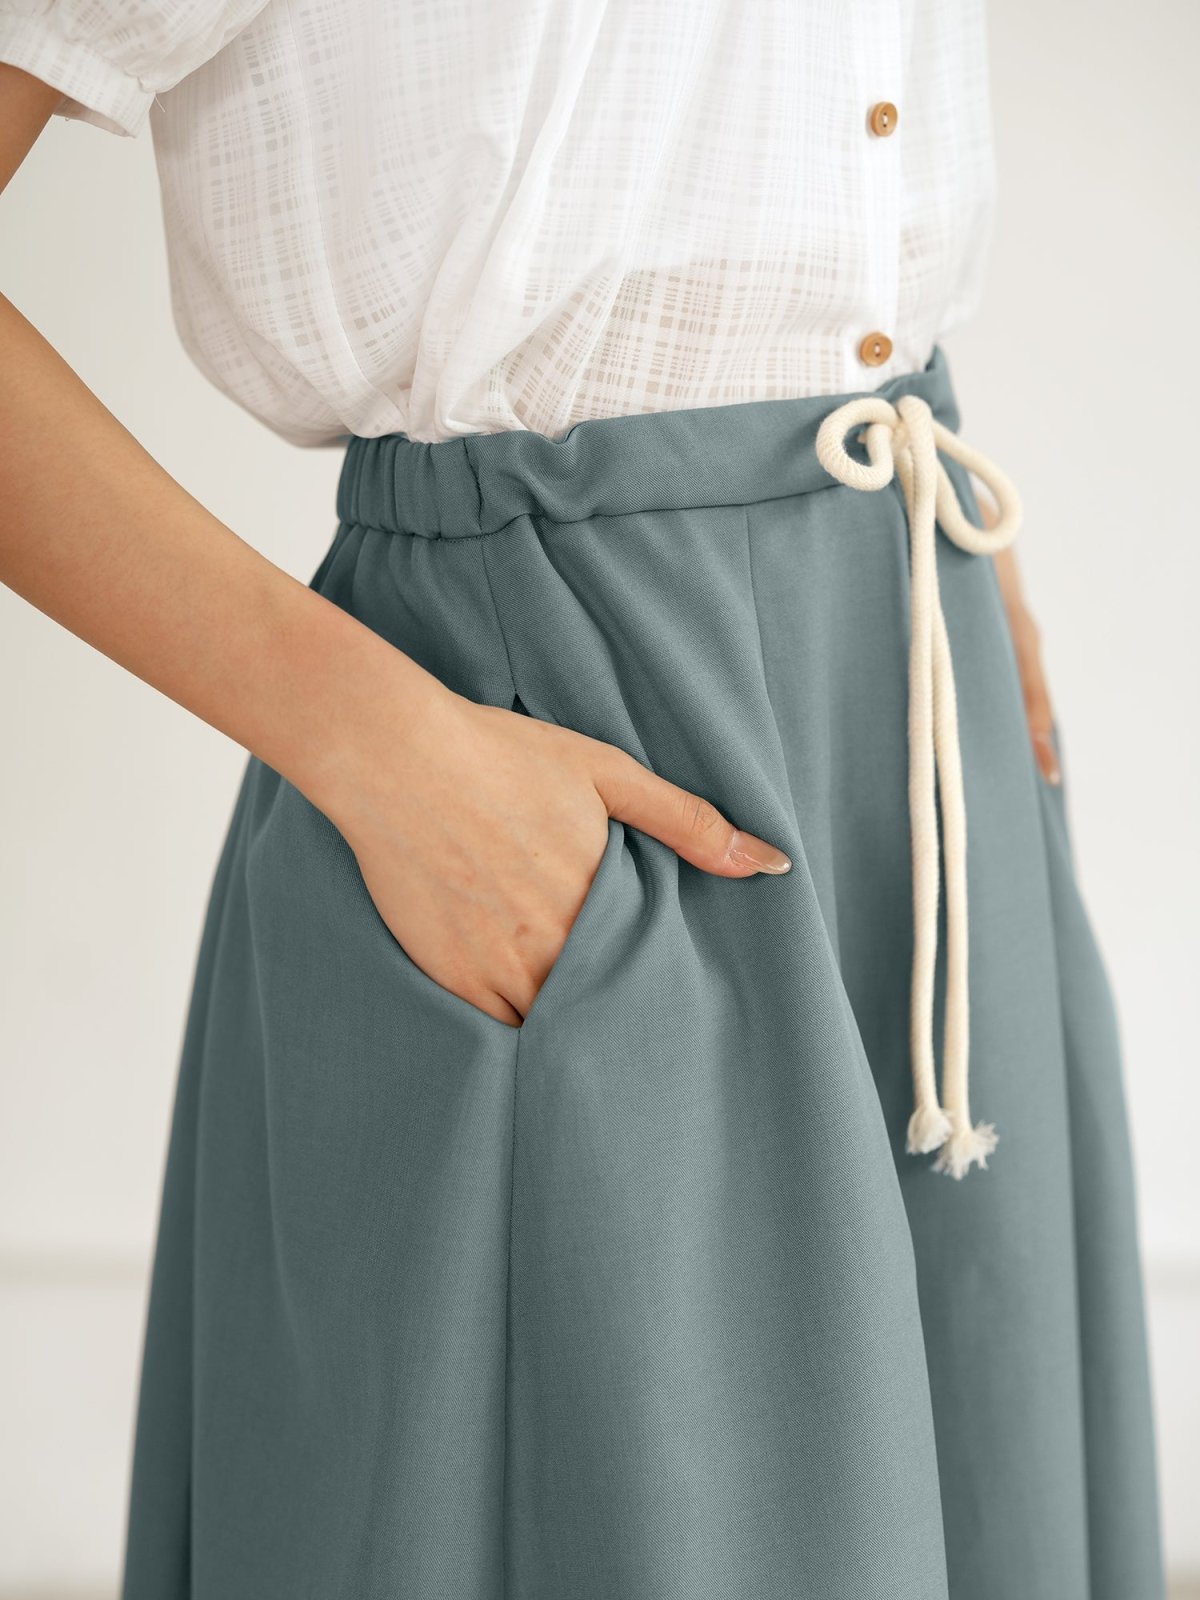 Belle Tie Waist Flare Midi Skirt - DAG-DD9534-23TealF - Teal - F - D'ZAGE Designs